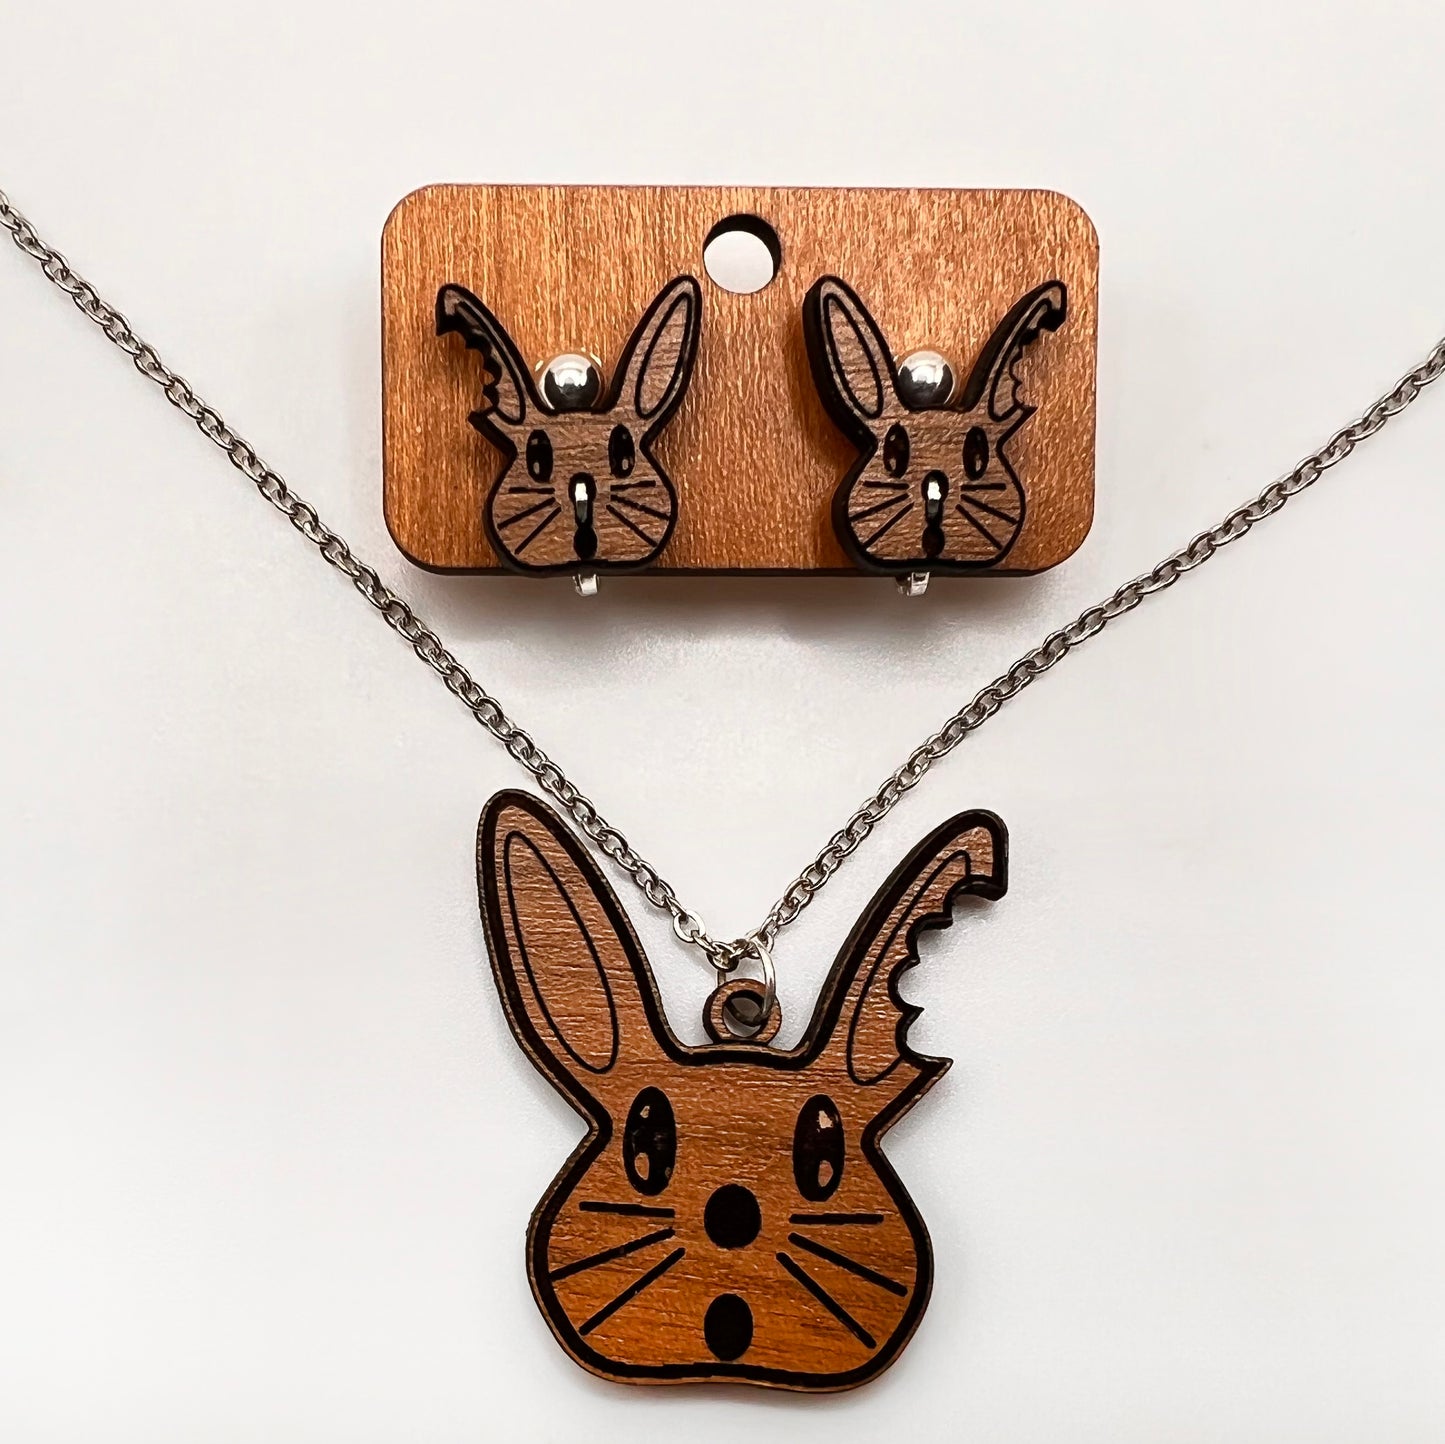 Bitten Chocolate Bunny - Clipon Earrings and Pendant